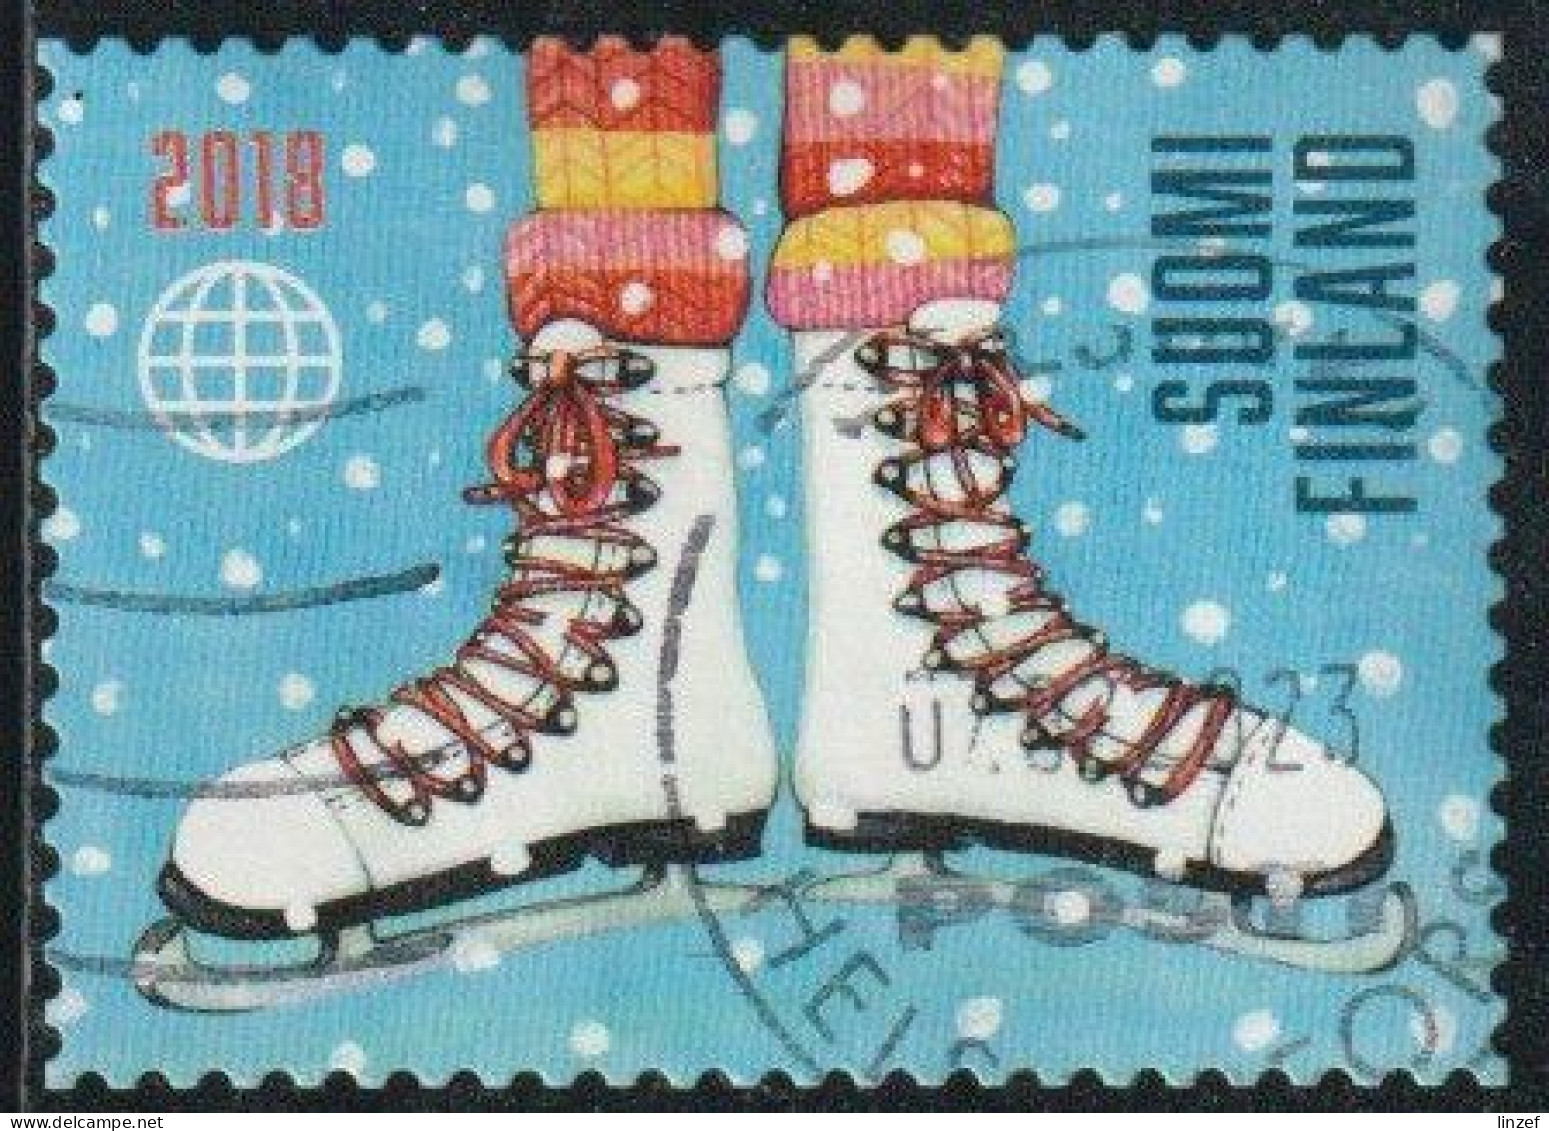 Finlande 2018 Yv. N°2573 - Noël - Patins à Glace - Oblitéré - Used Stamps